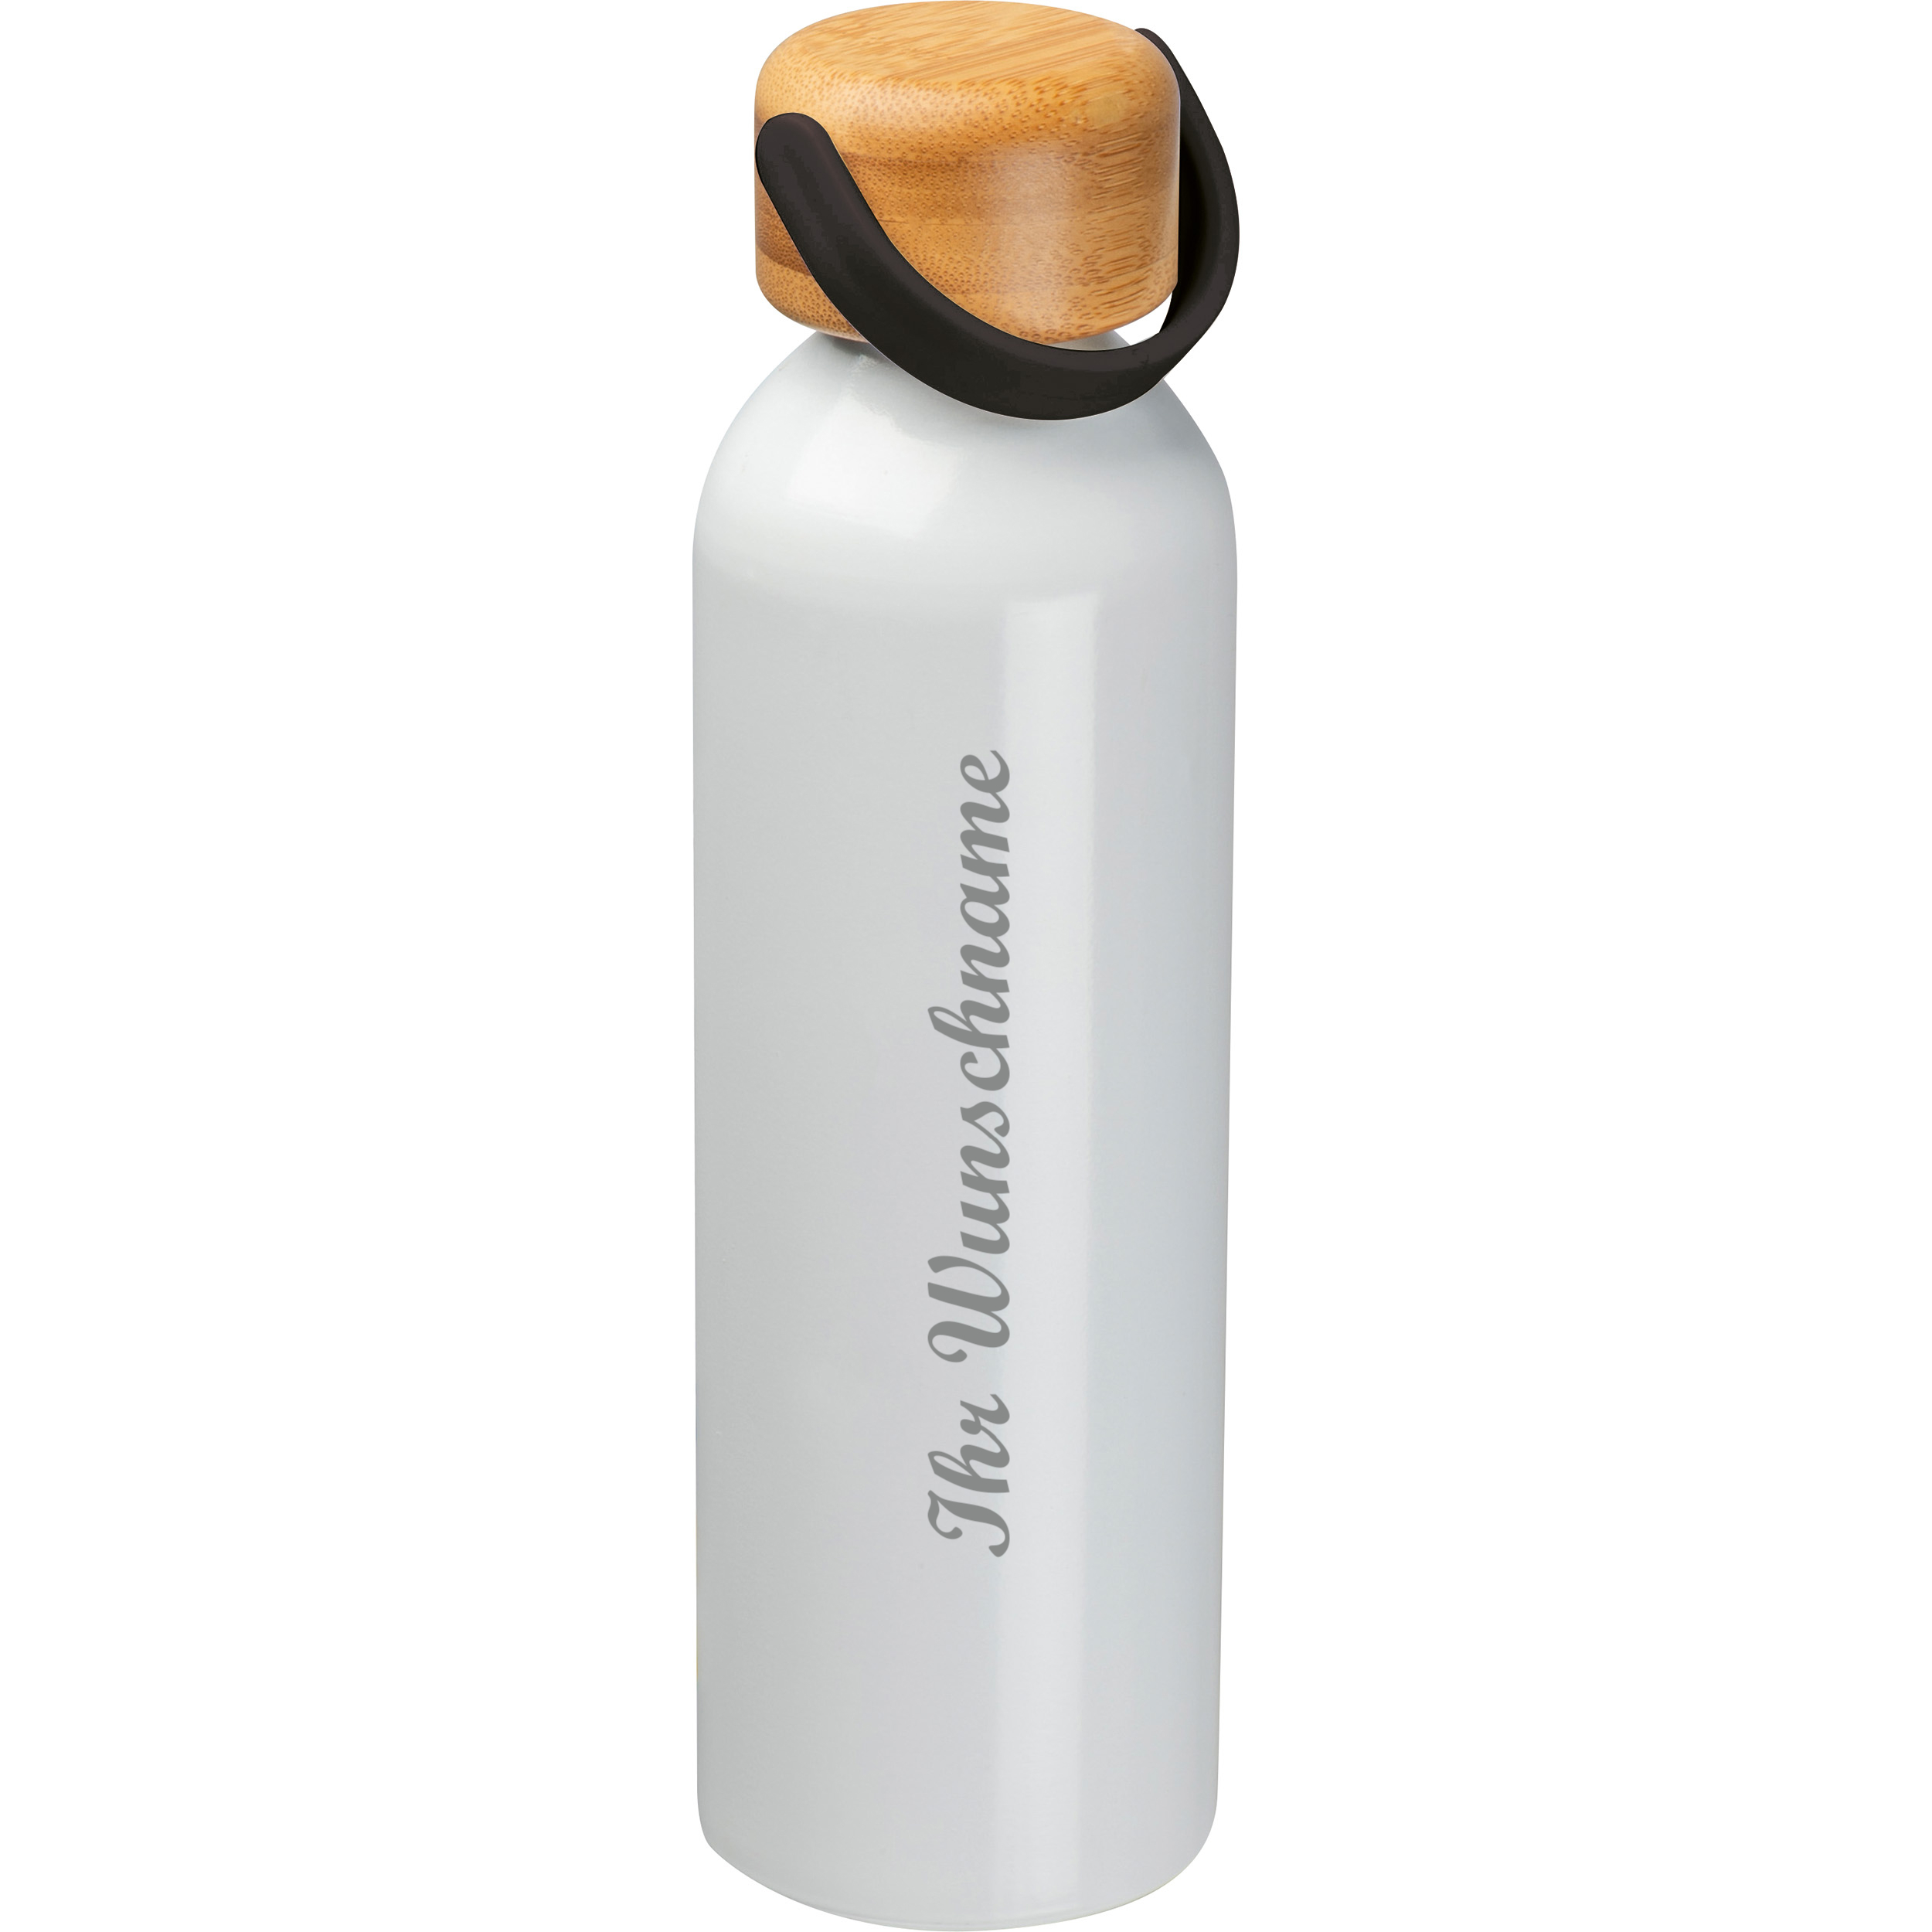 Trinkflasche aus recyceltem Aluminium mit Namensgravur - 600 ml - Farbe: wei